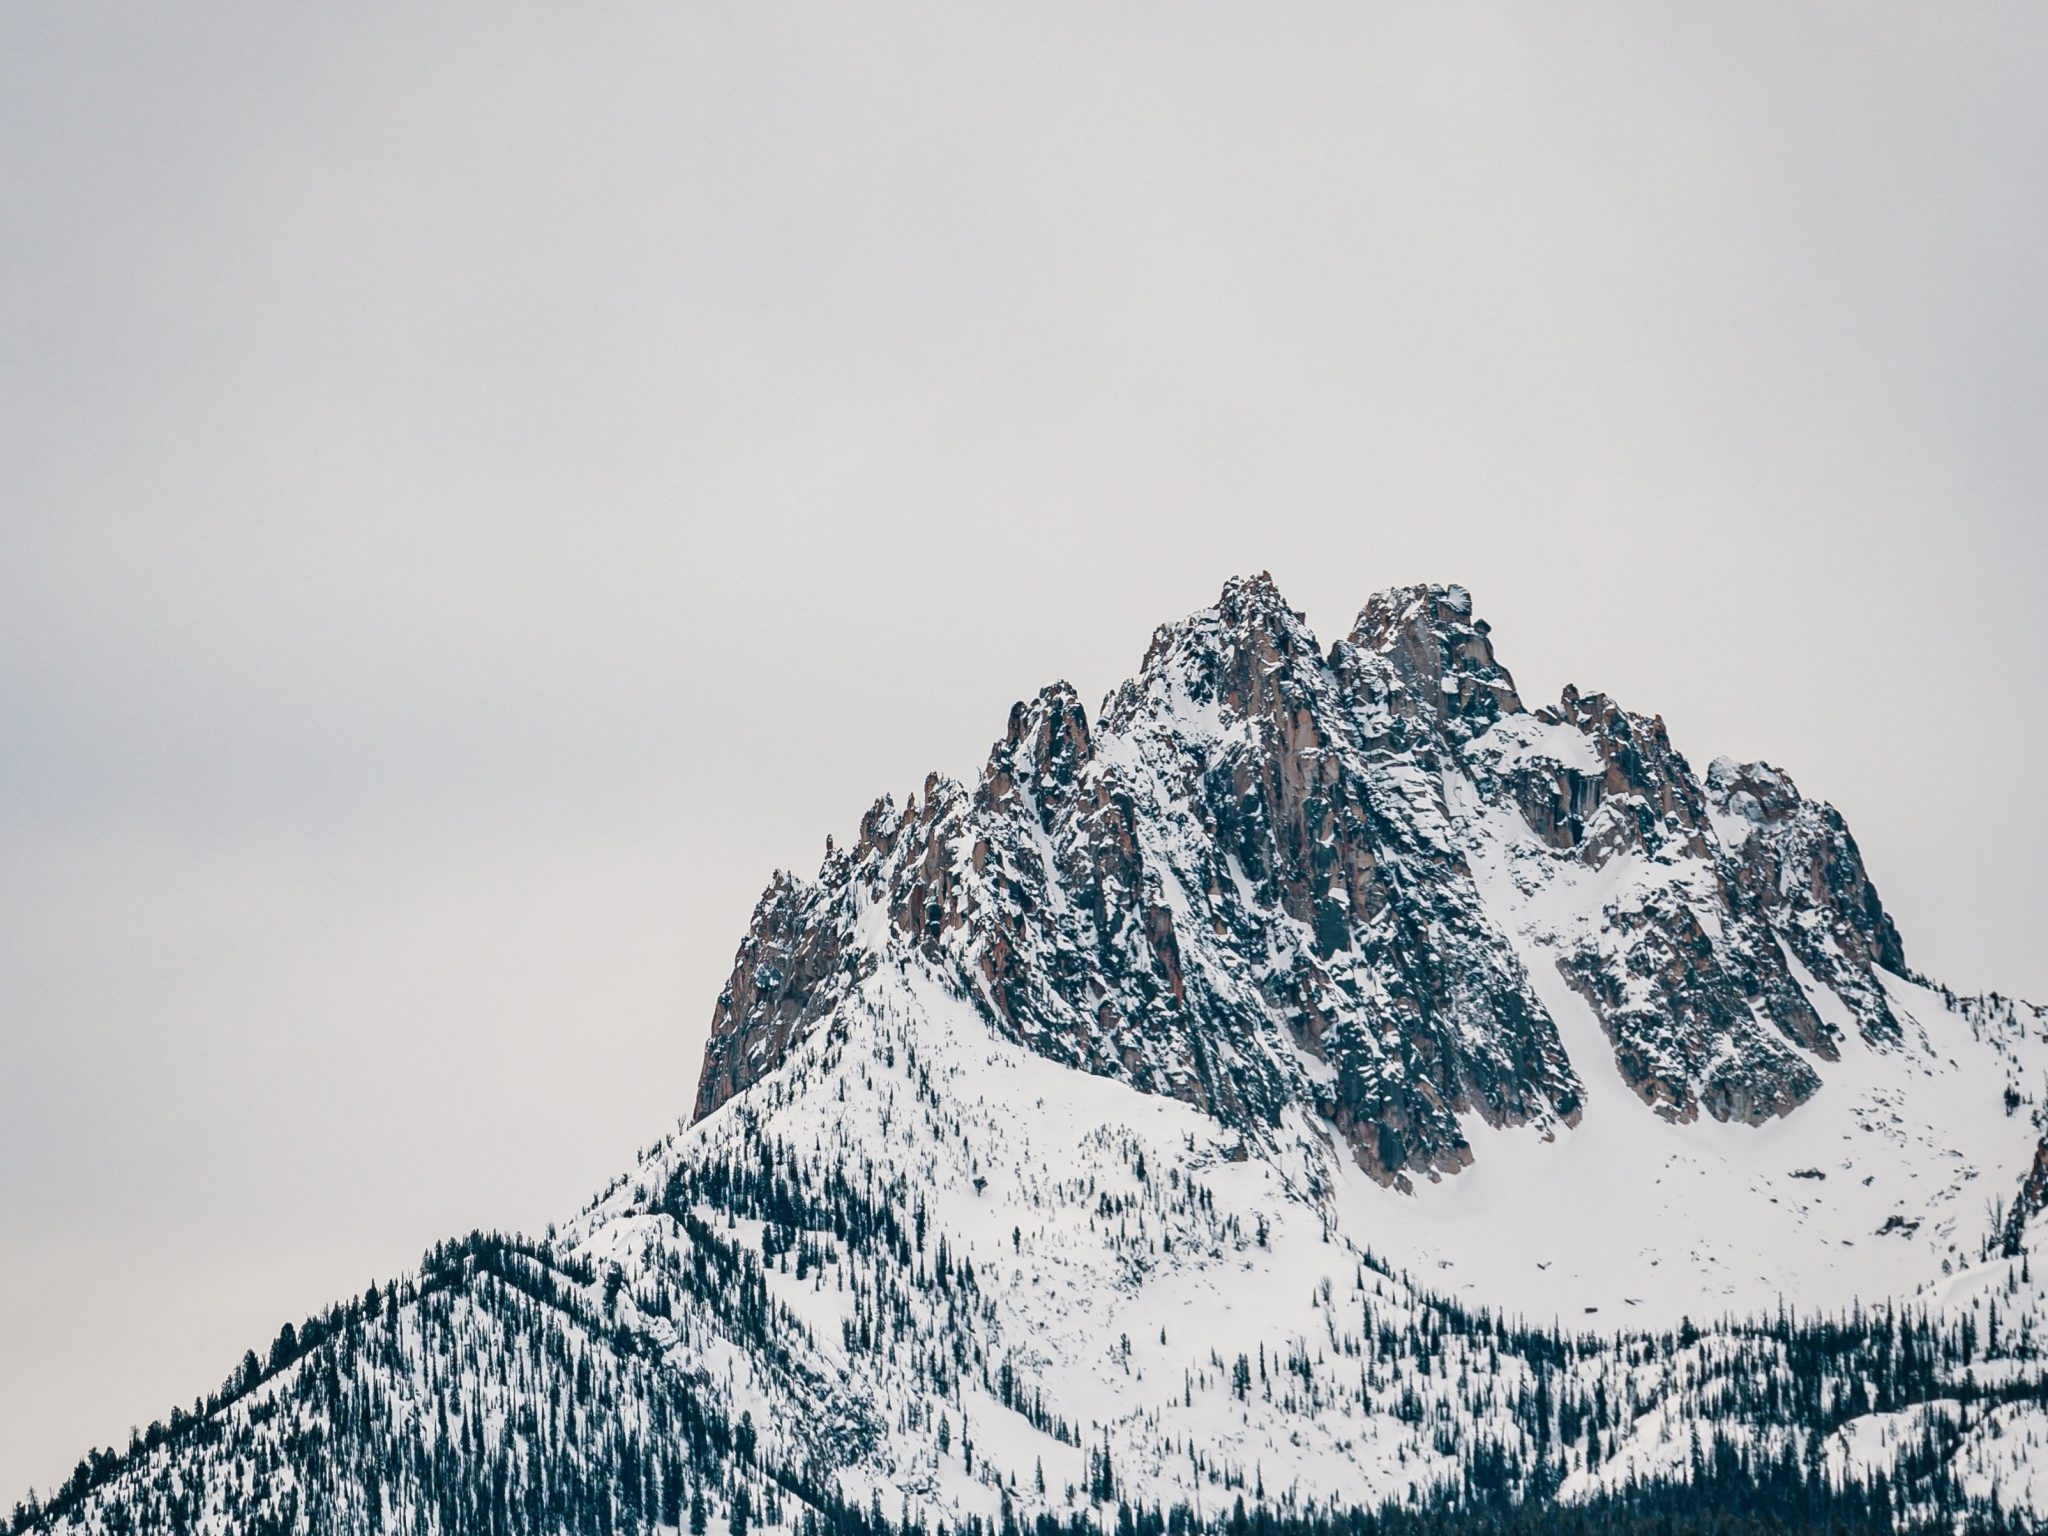 2048x1536 wallpaper Winter Snow Mountain Peak Rocky iPad Wallpaper 2048x1536 pixels resolution